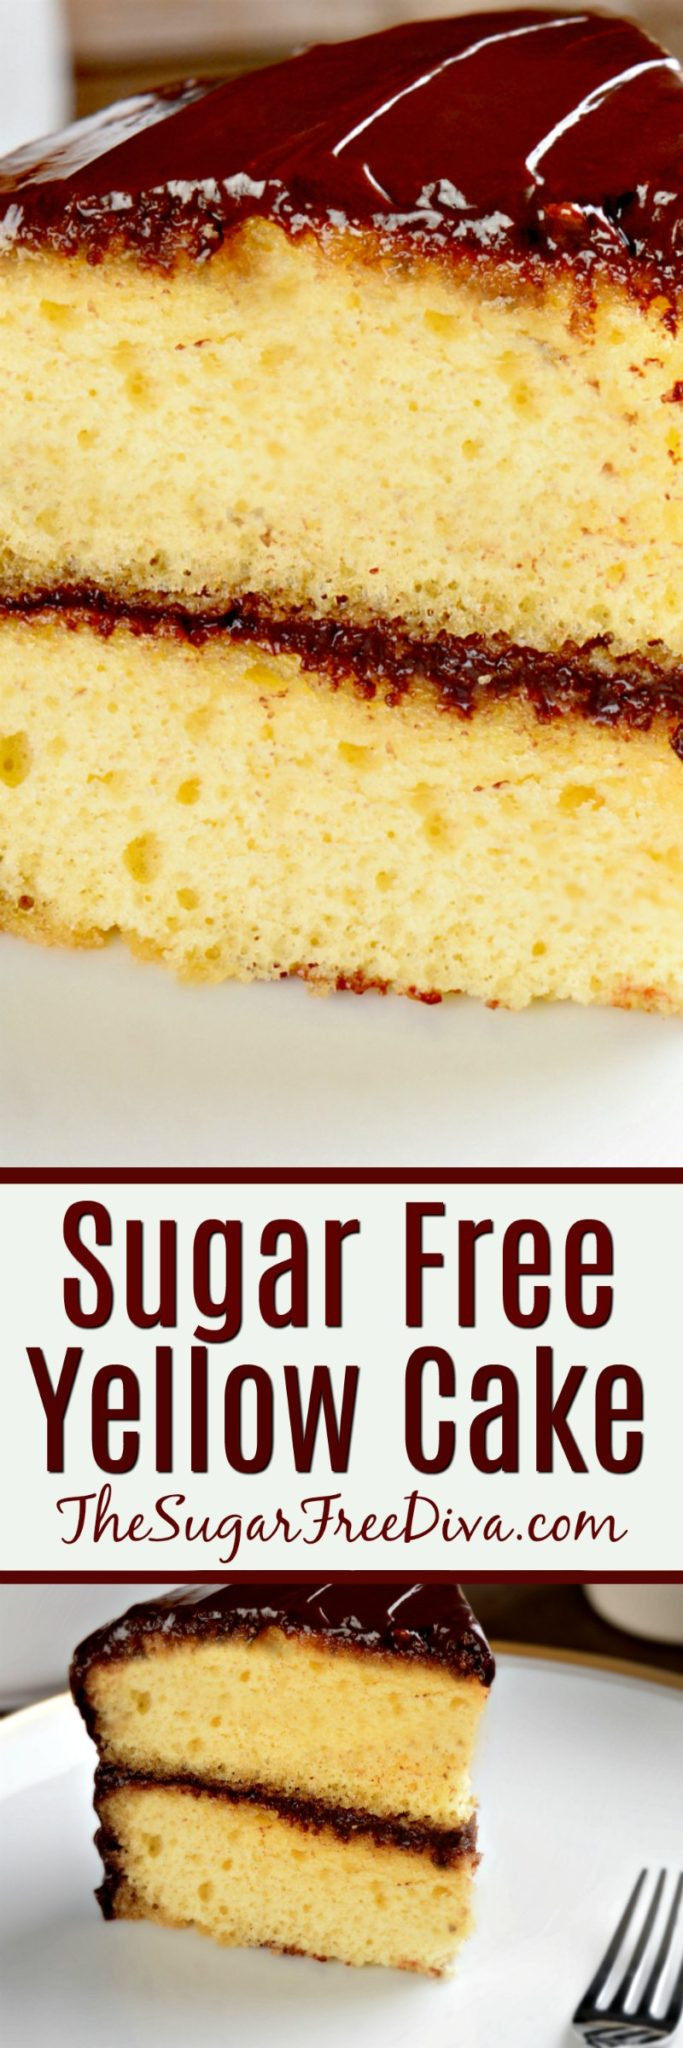 Sugar Free Birthday Cake Recipe
 A Basic and Easy Sugar Free Yellow Cake Recipe